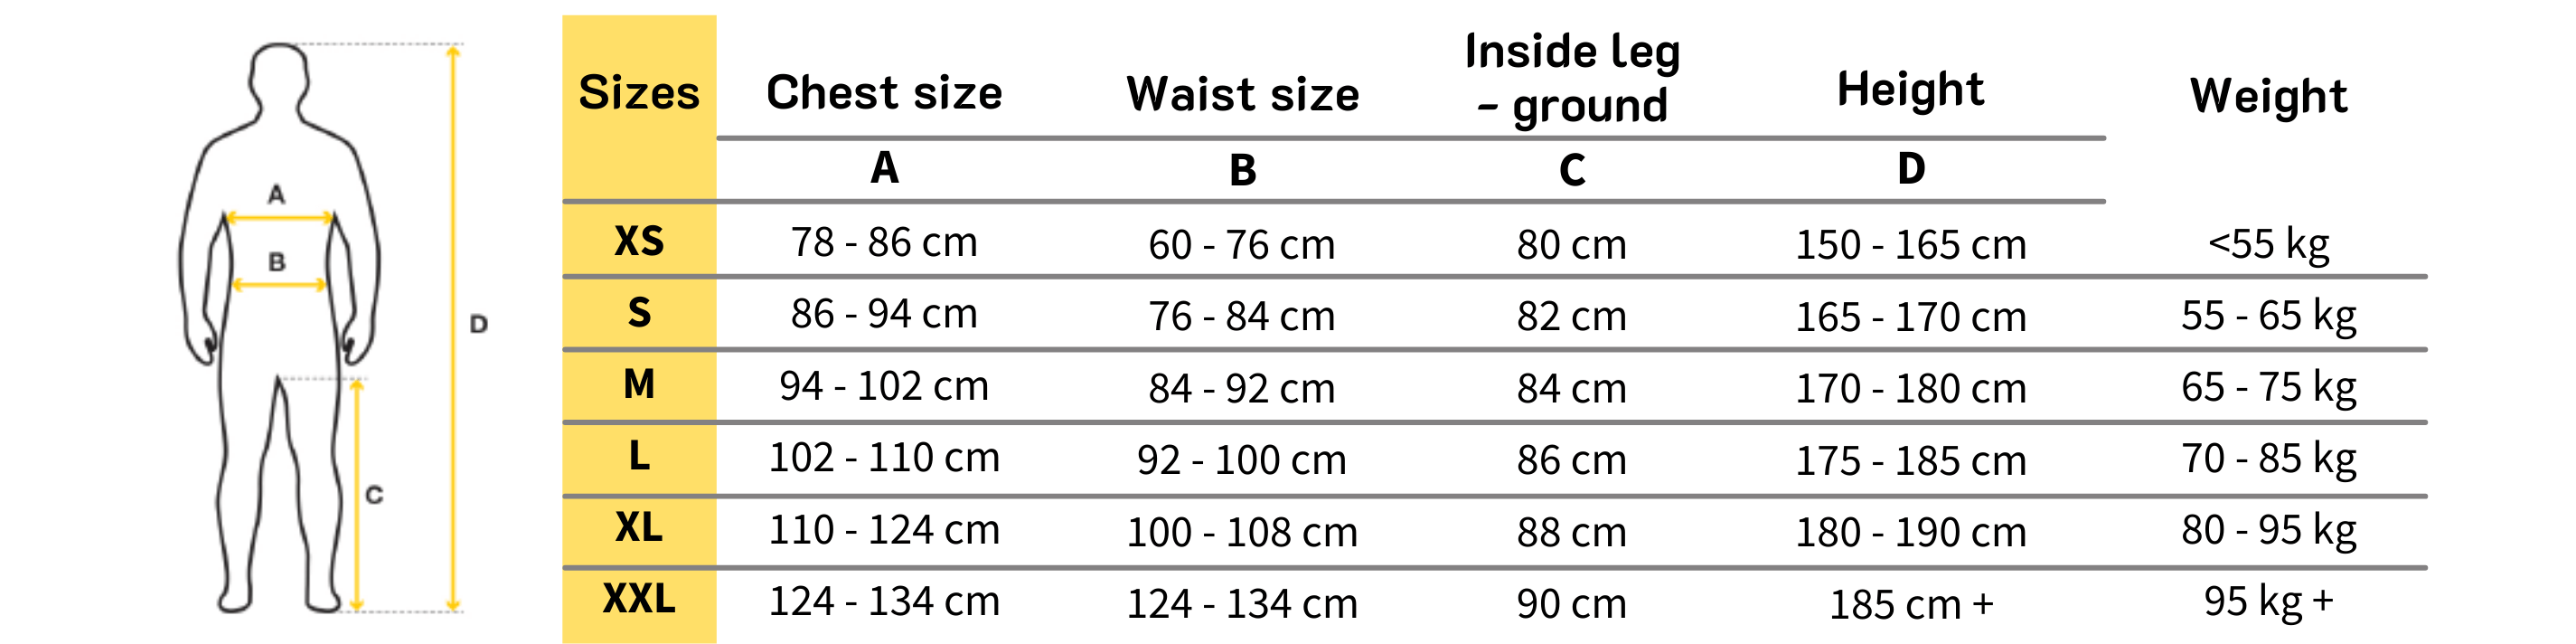 Guy Cotten Clothing size chart